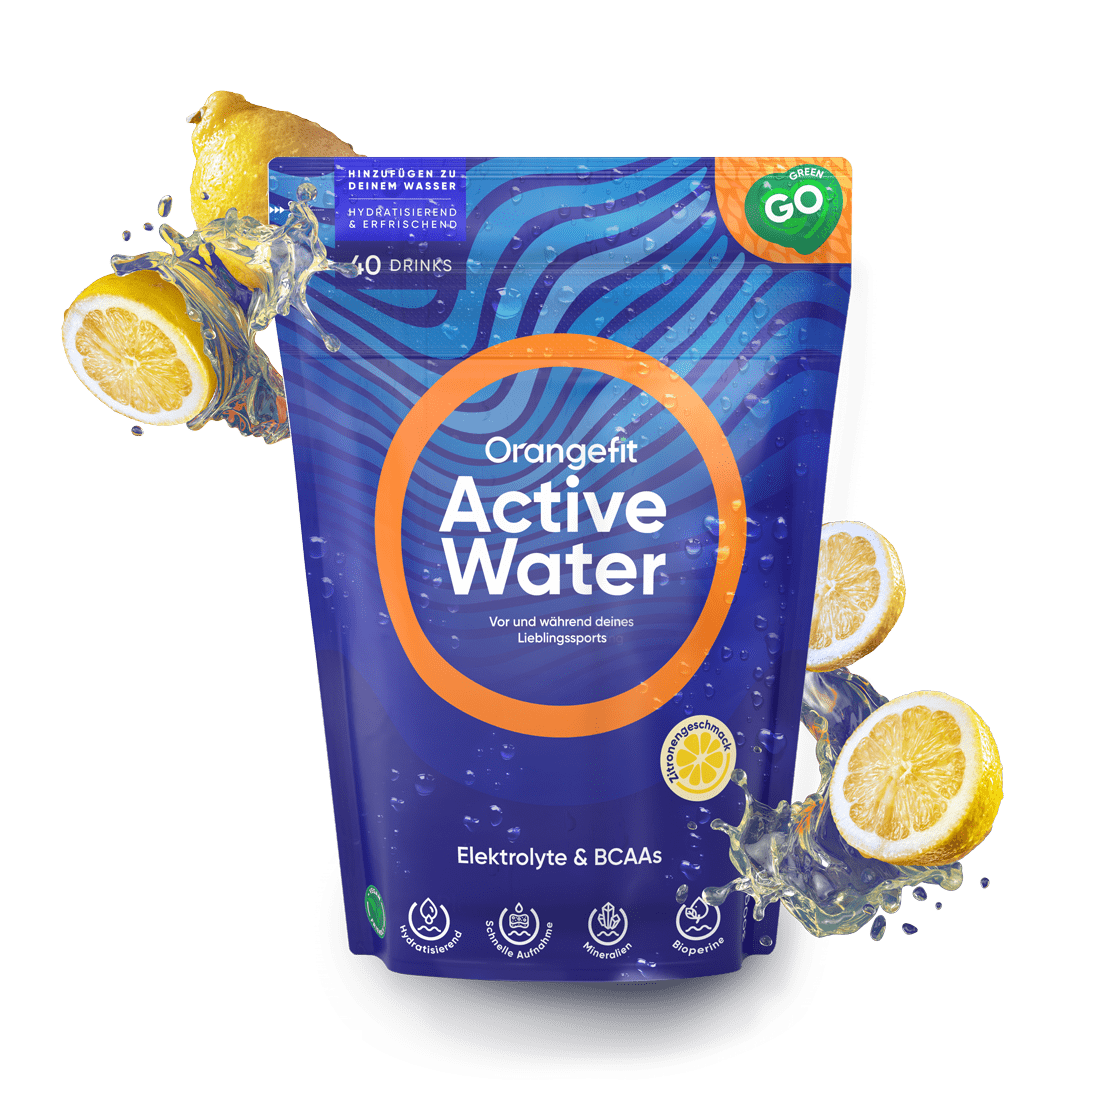 Orangefit Active Water, 300g